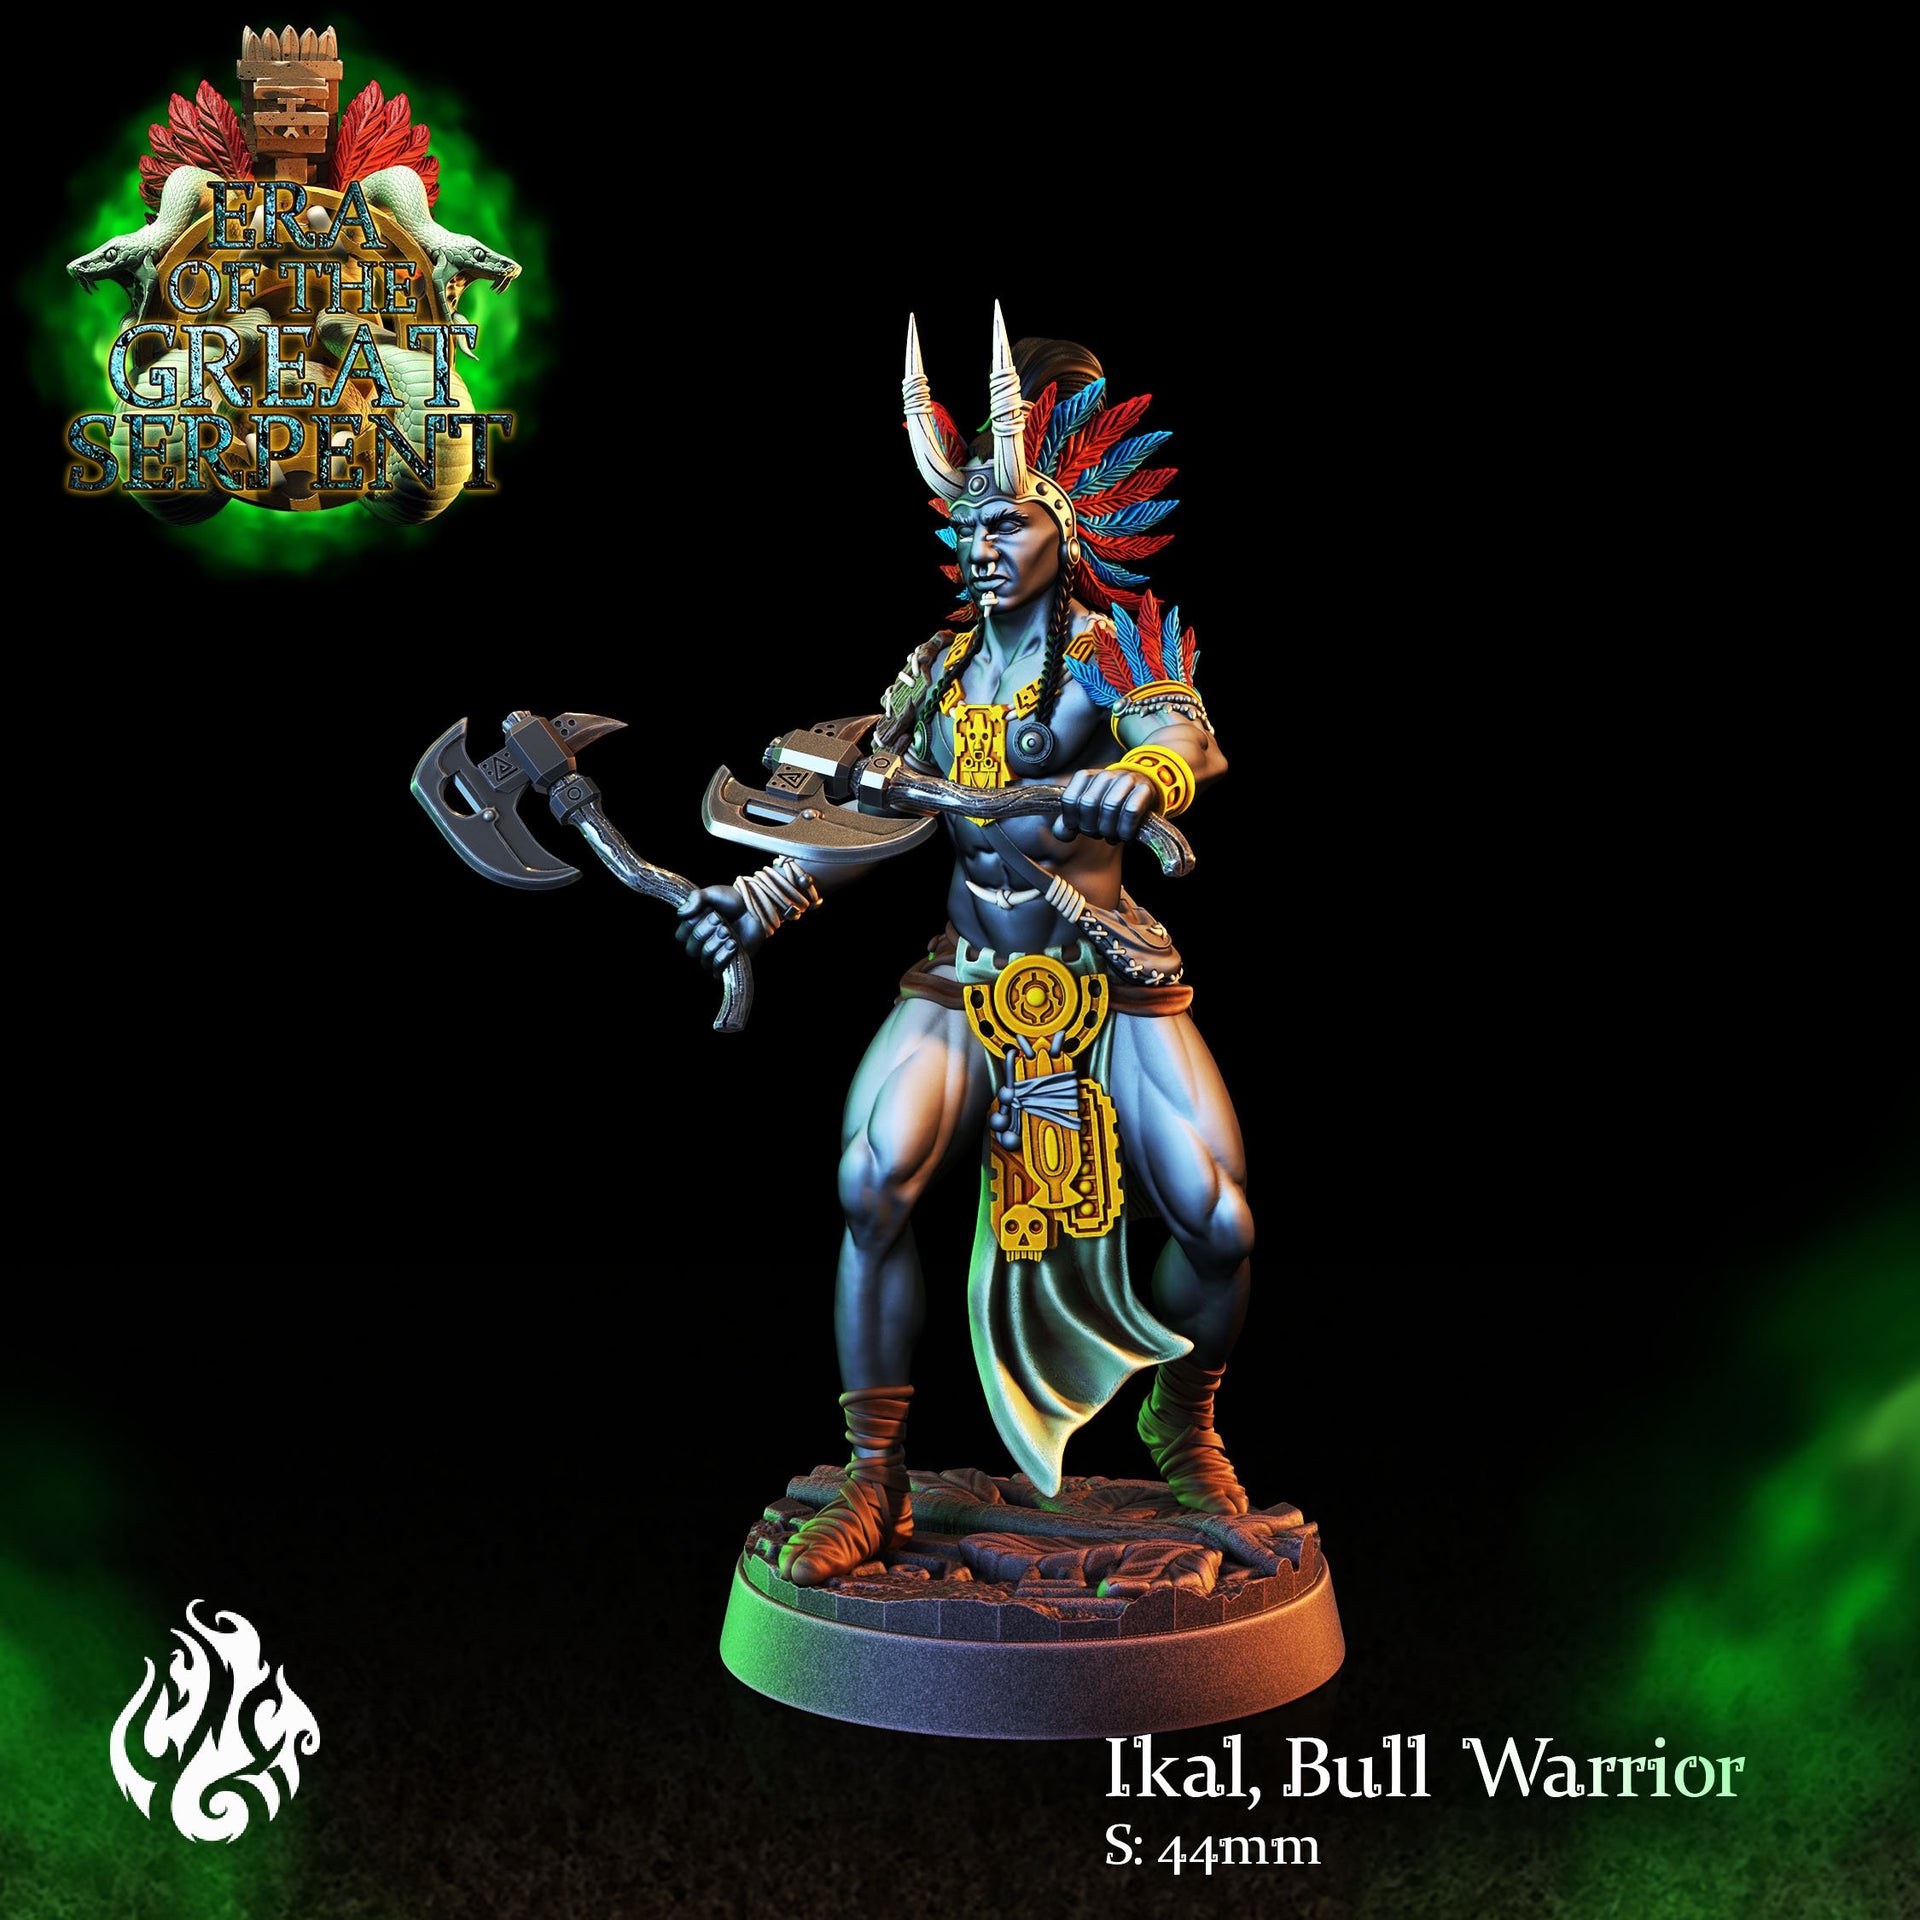 Ikal, Bull Warrior - Crippled God Foundry - Era of the Great Serpent  